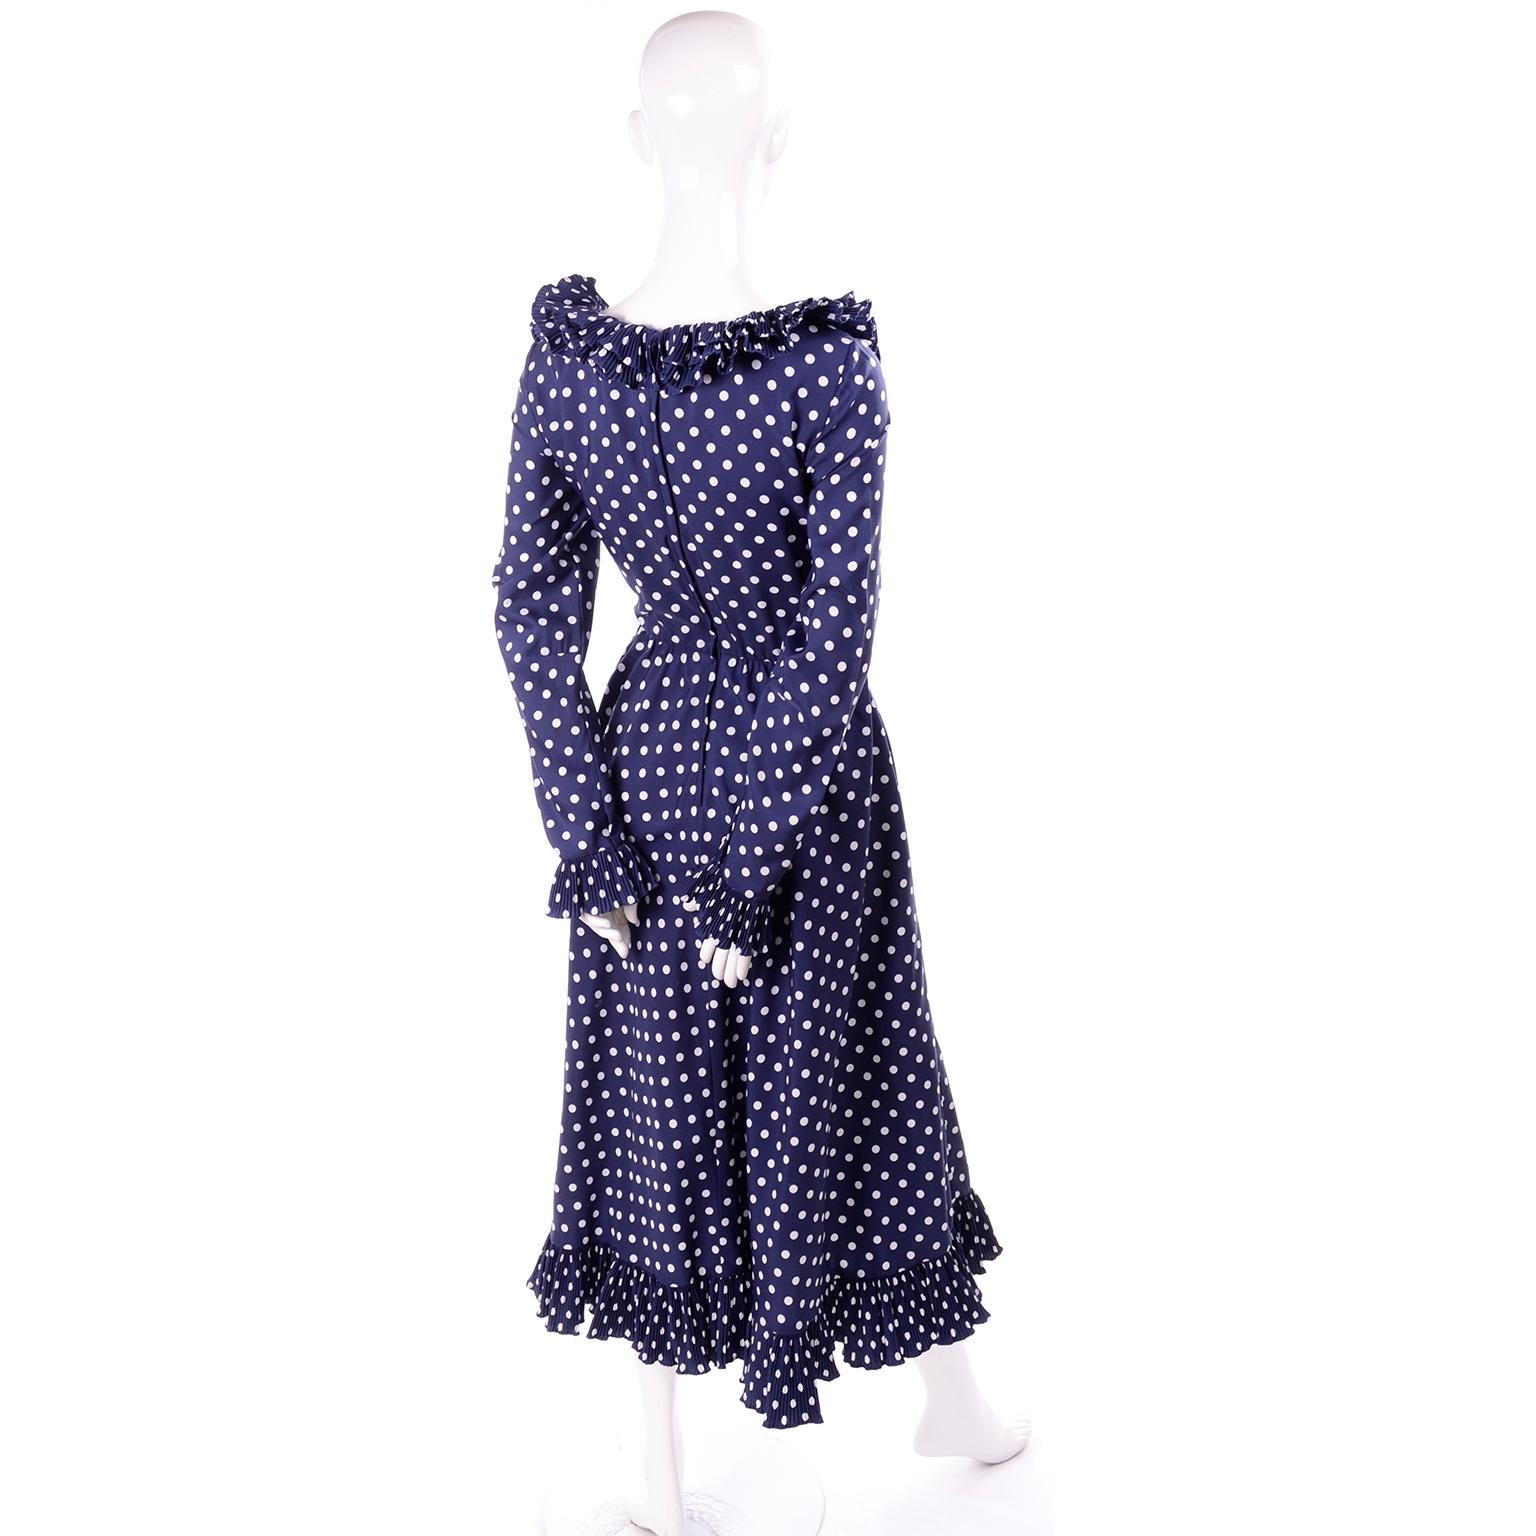 1970s polka dot dress